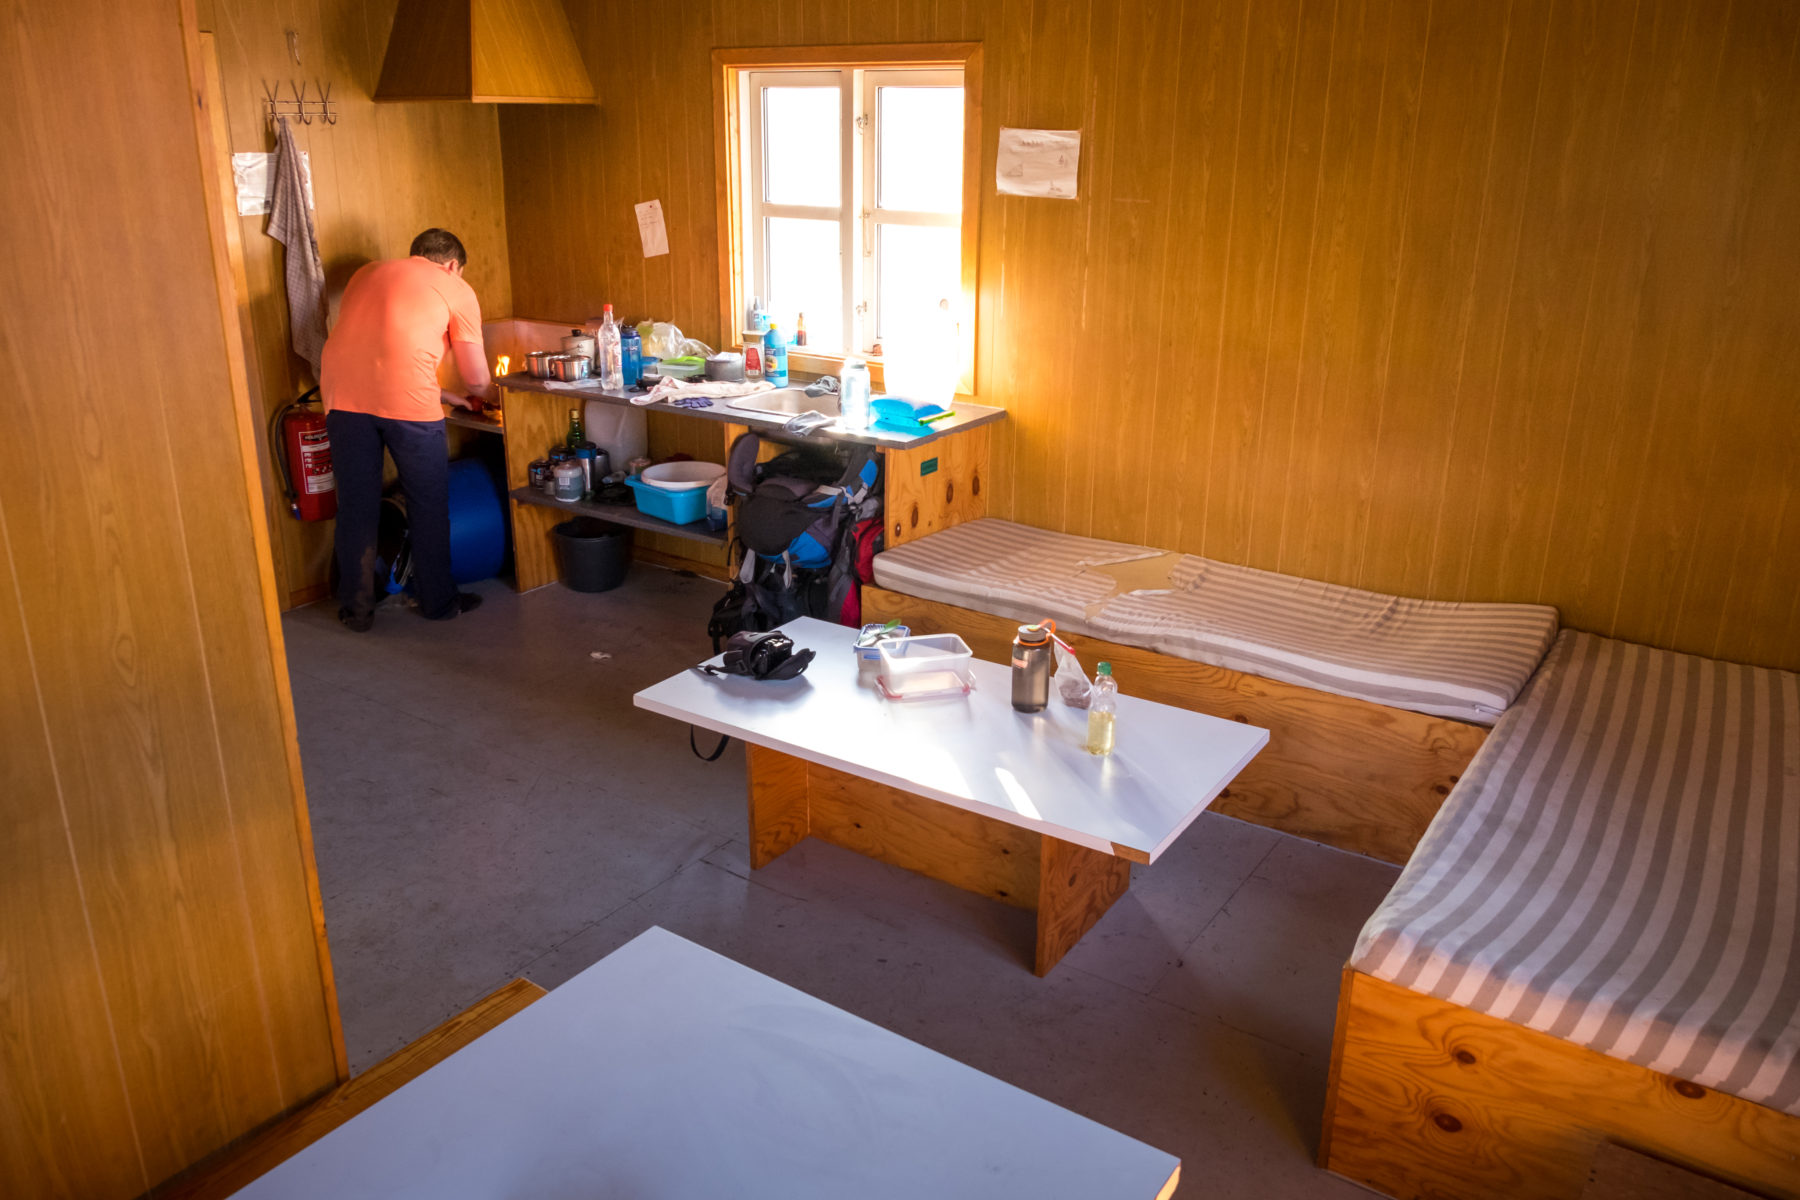 Inside eating area Innajuatooq II hut - the Lake House - on the Arctic Circle Trail